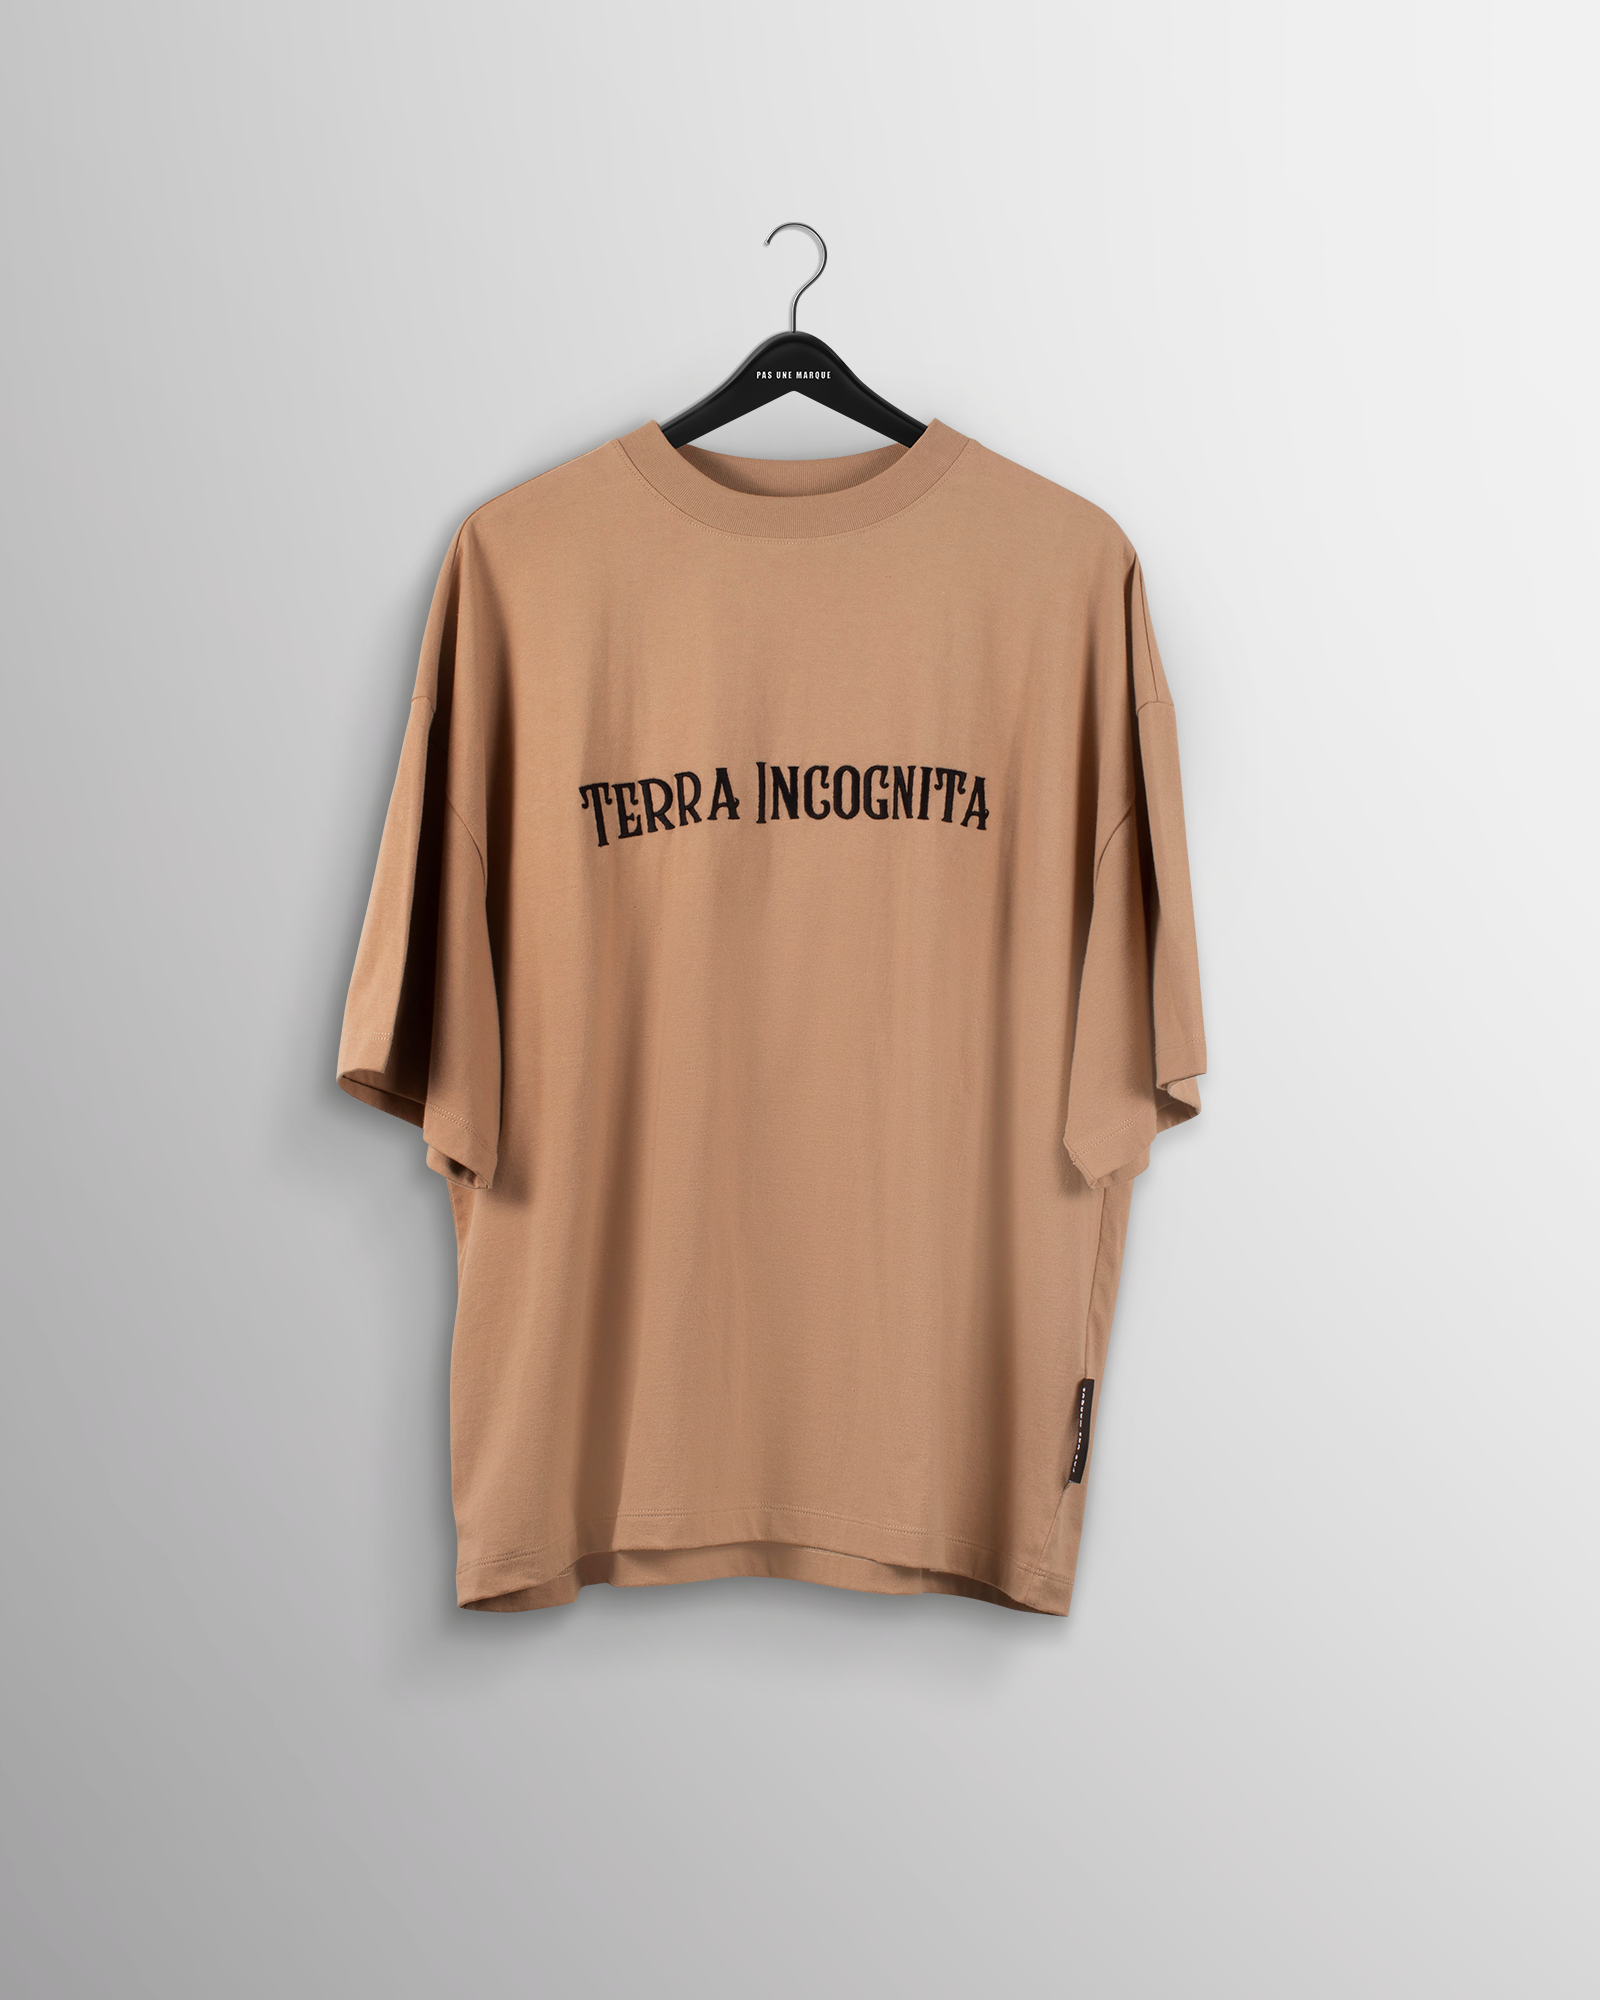 Terra Incognita Embroidered Tee Shirt (Camel)